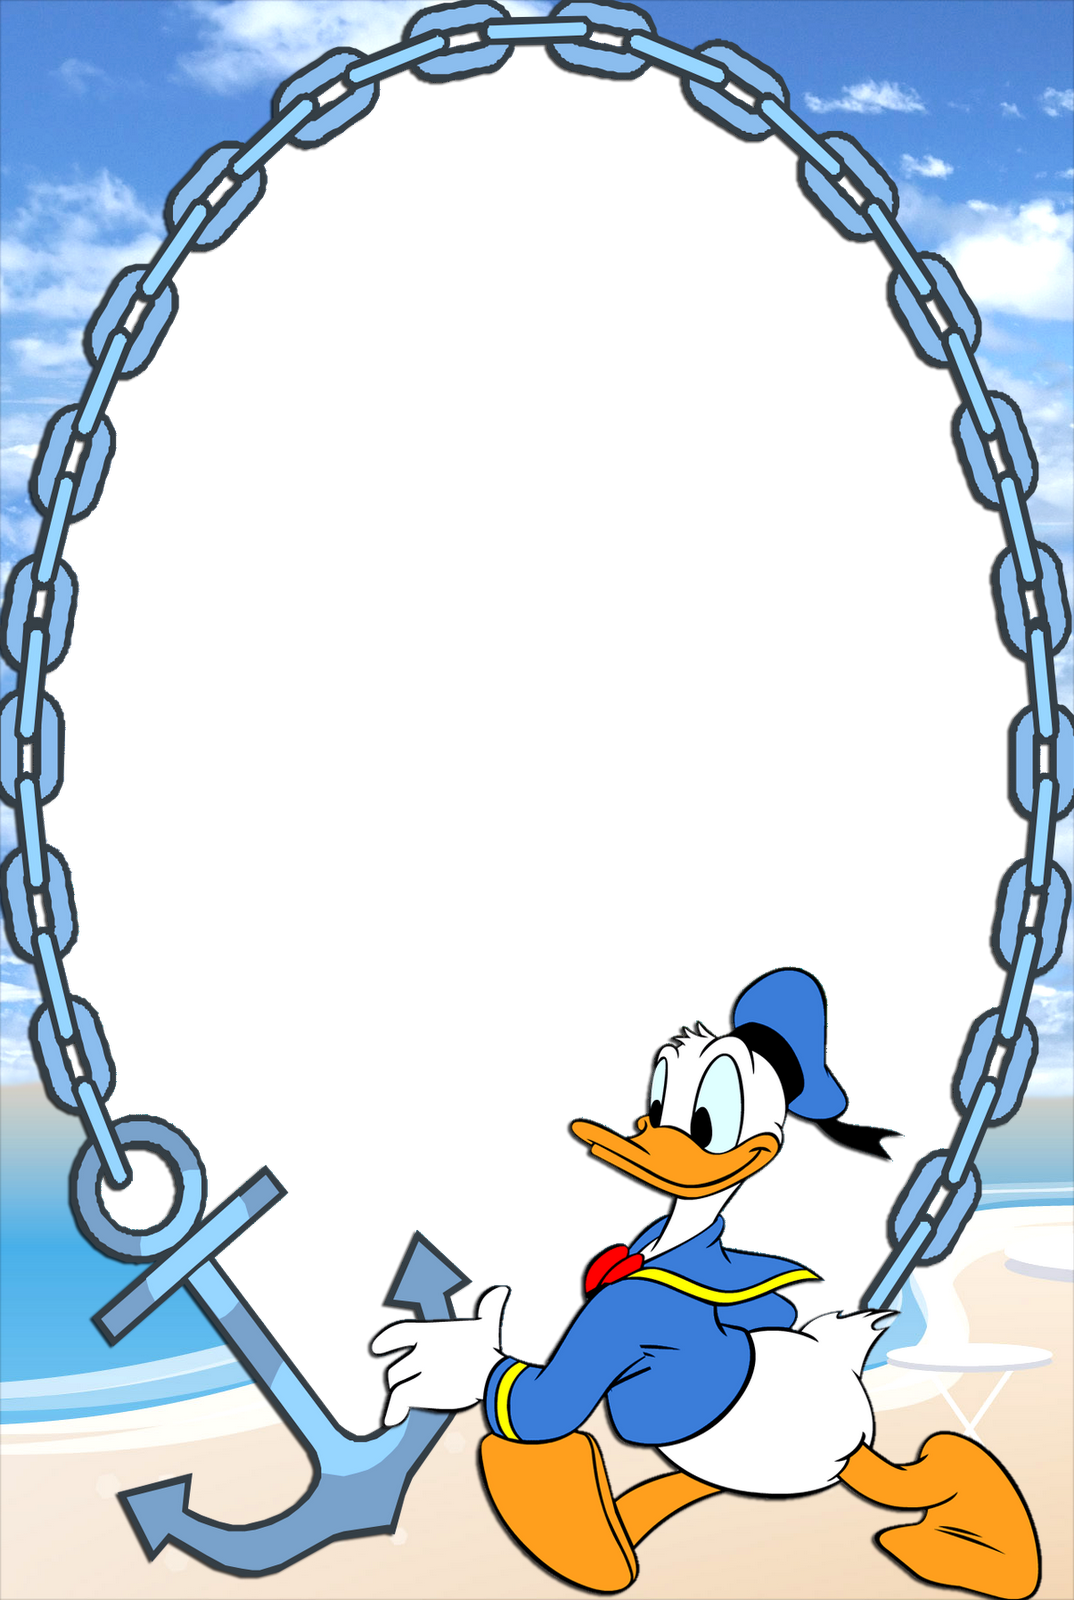 Download Donald Duck Frames Frame Disney Life Cards - Marcos De Dibujos Animados  PNG Image with No Background 